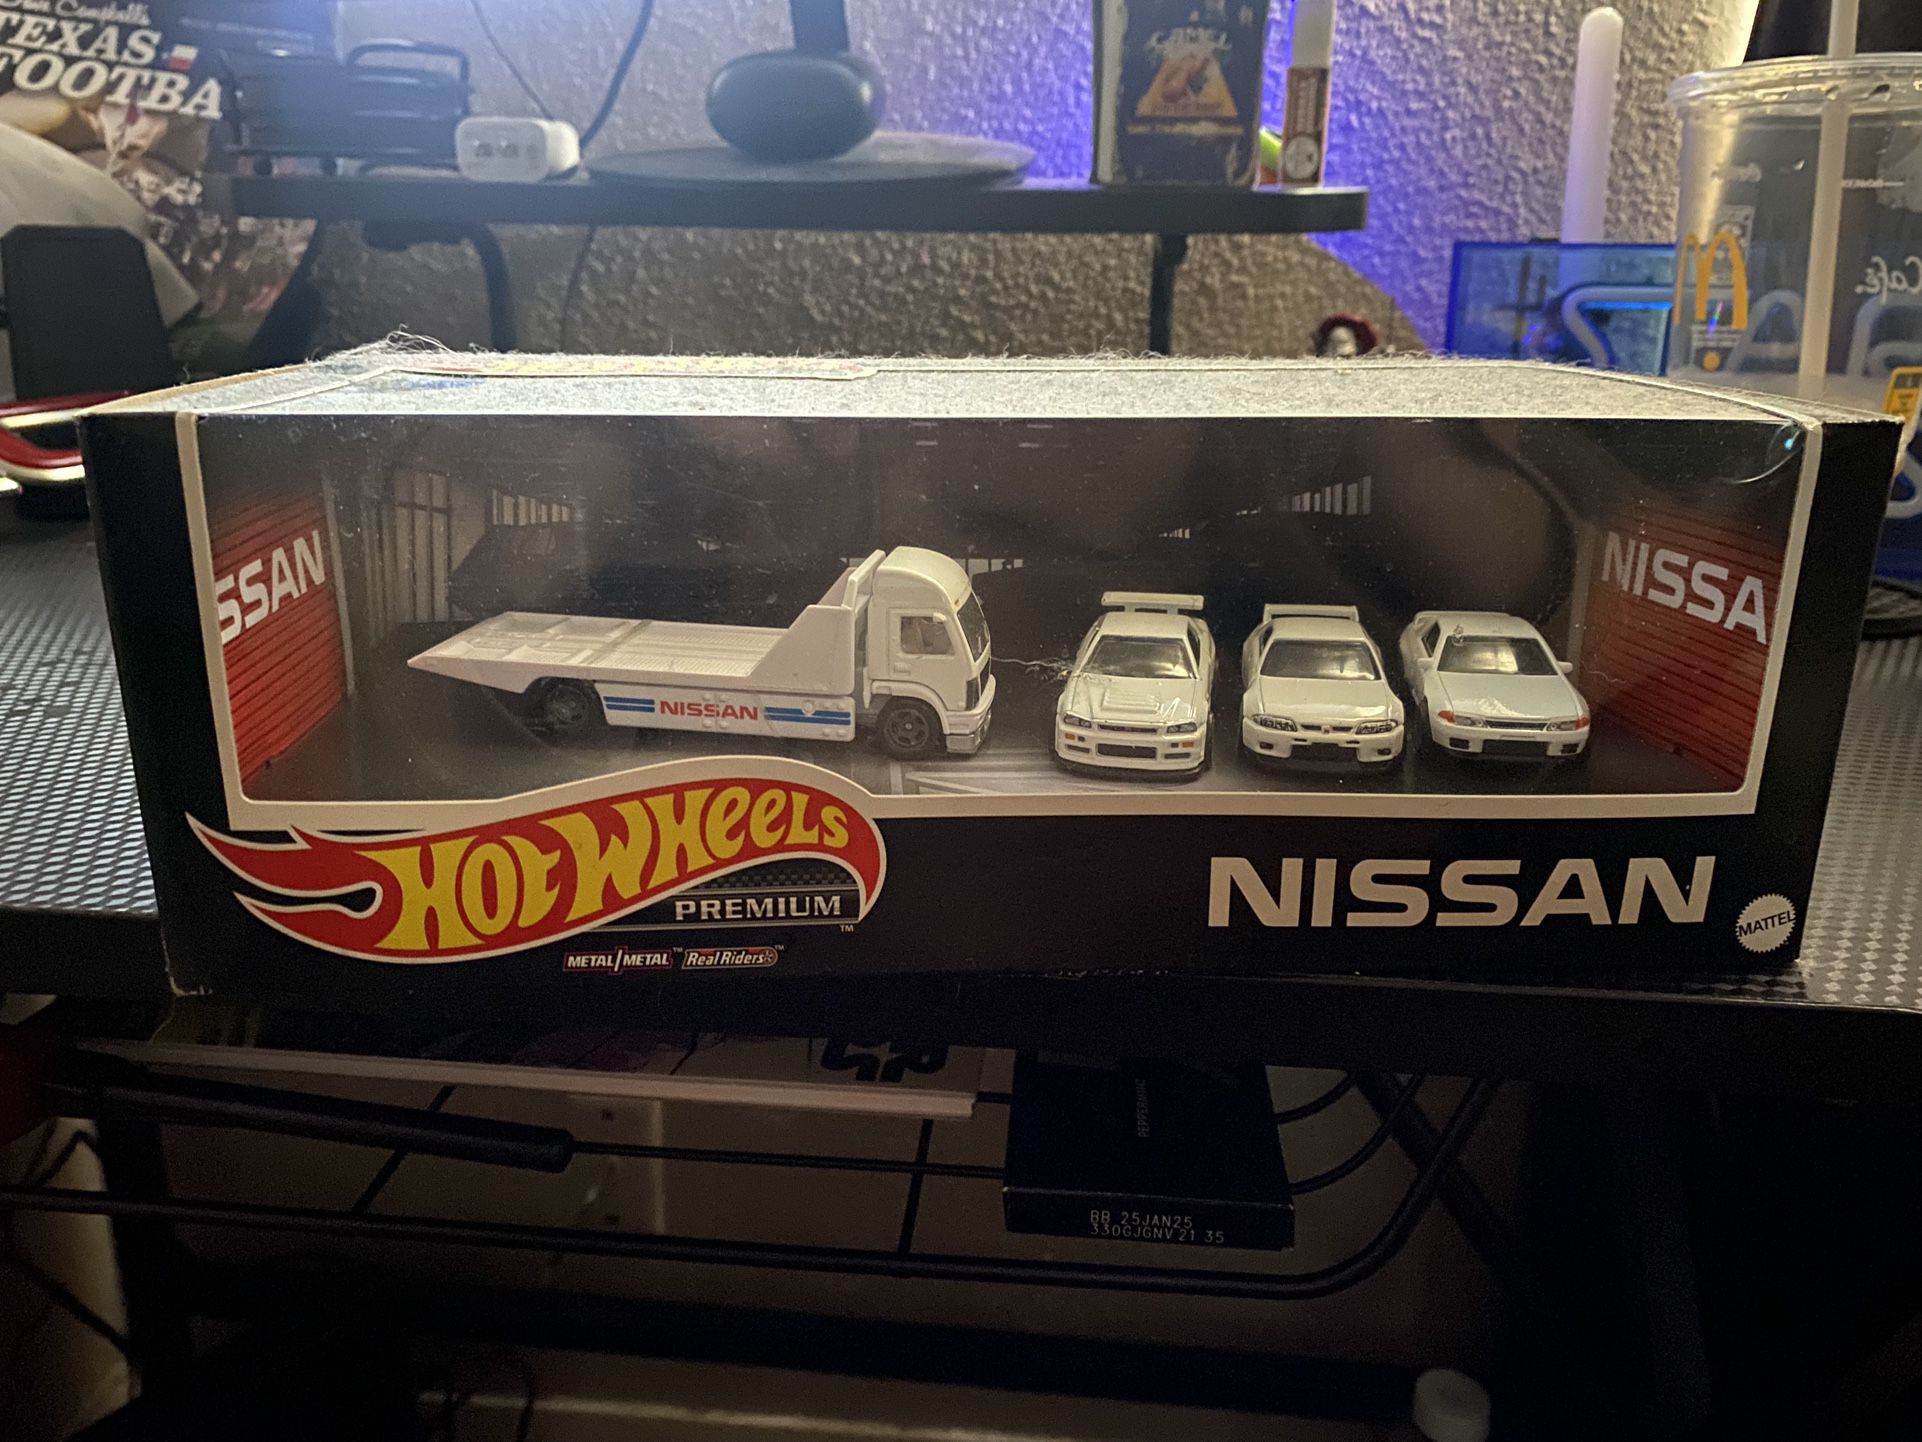 Nissan Skyline Hotwheel Collector Set